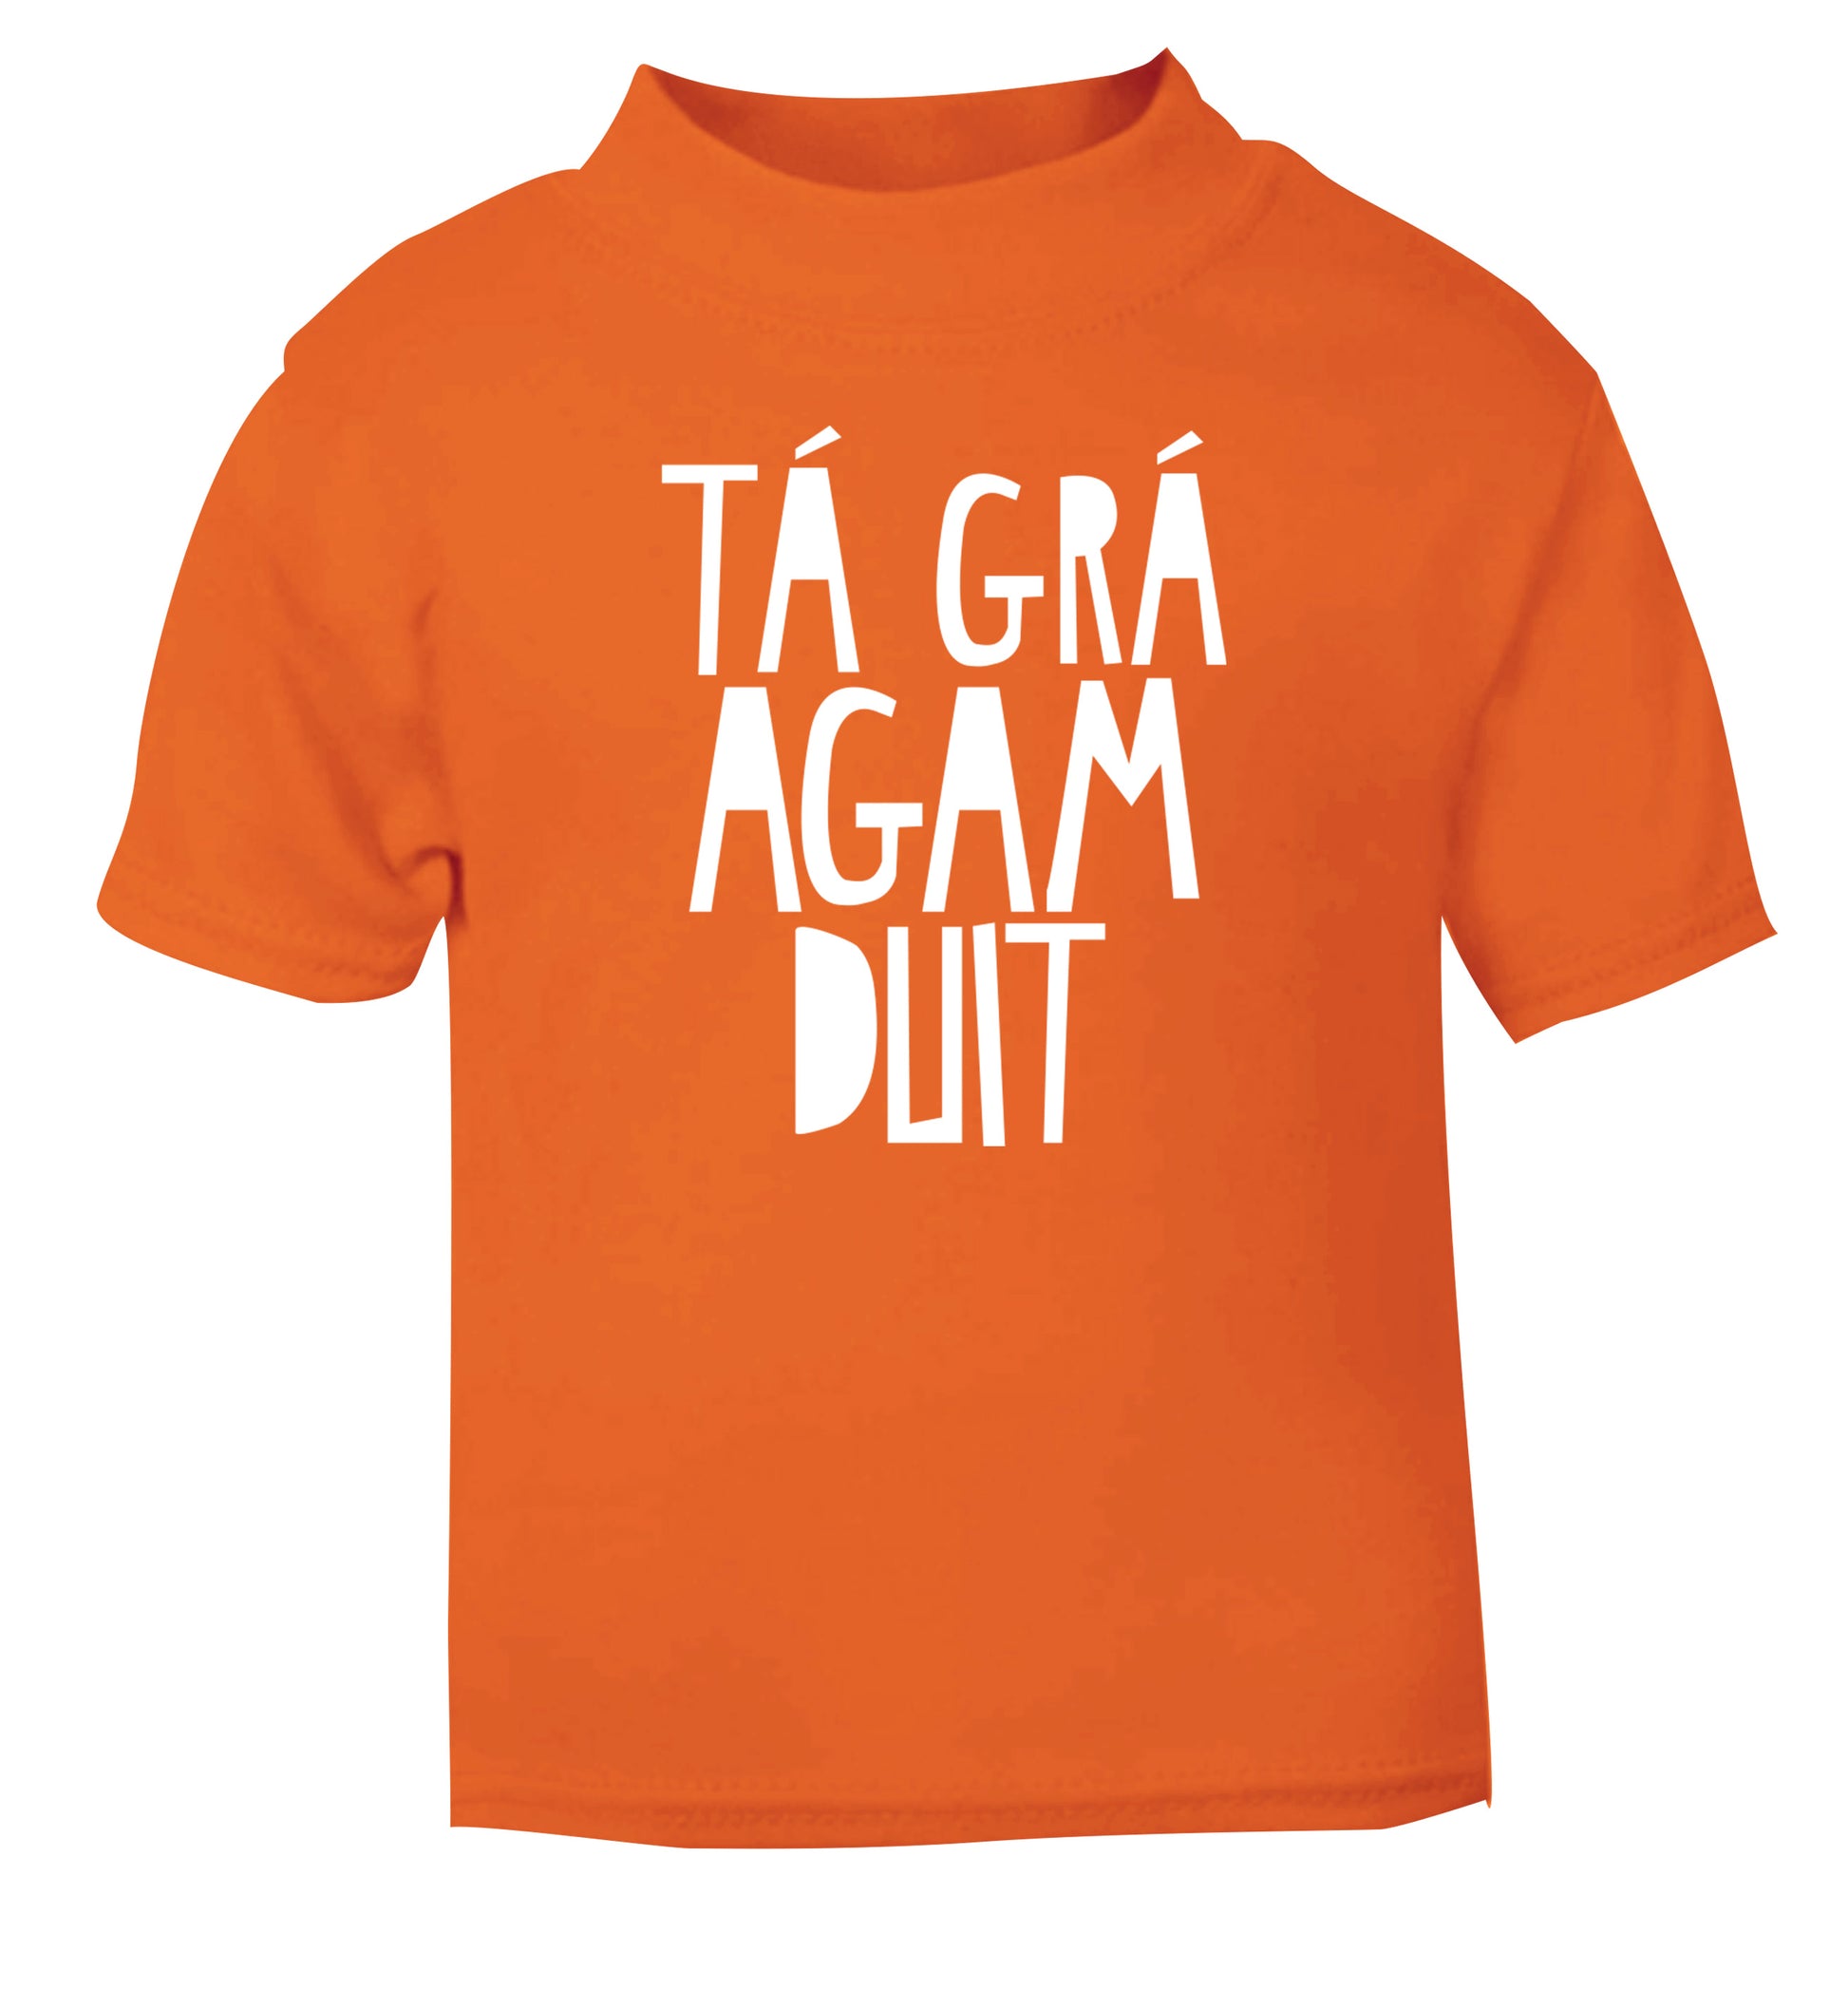 T‡ gr‡ agam duit - I love you orange Baby Toddler Tshirt 2 Years